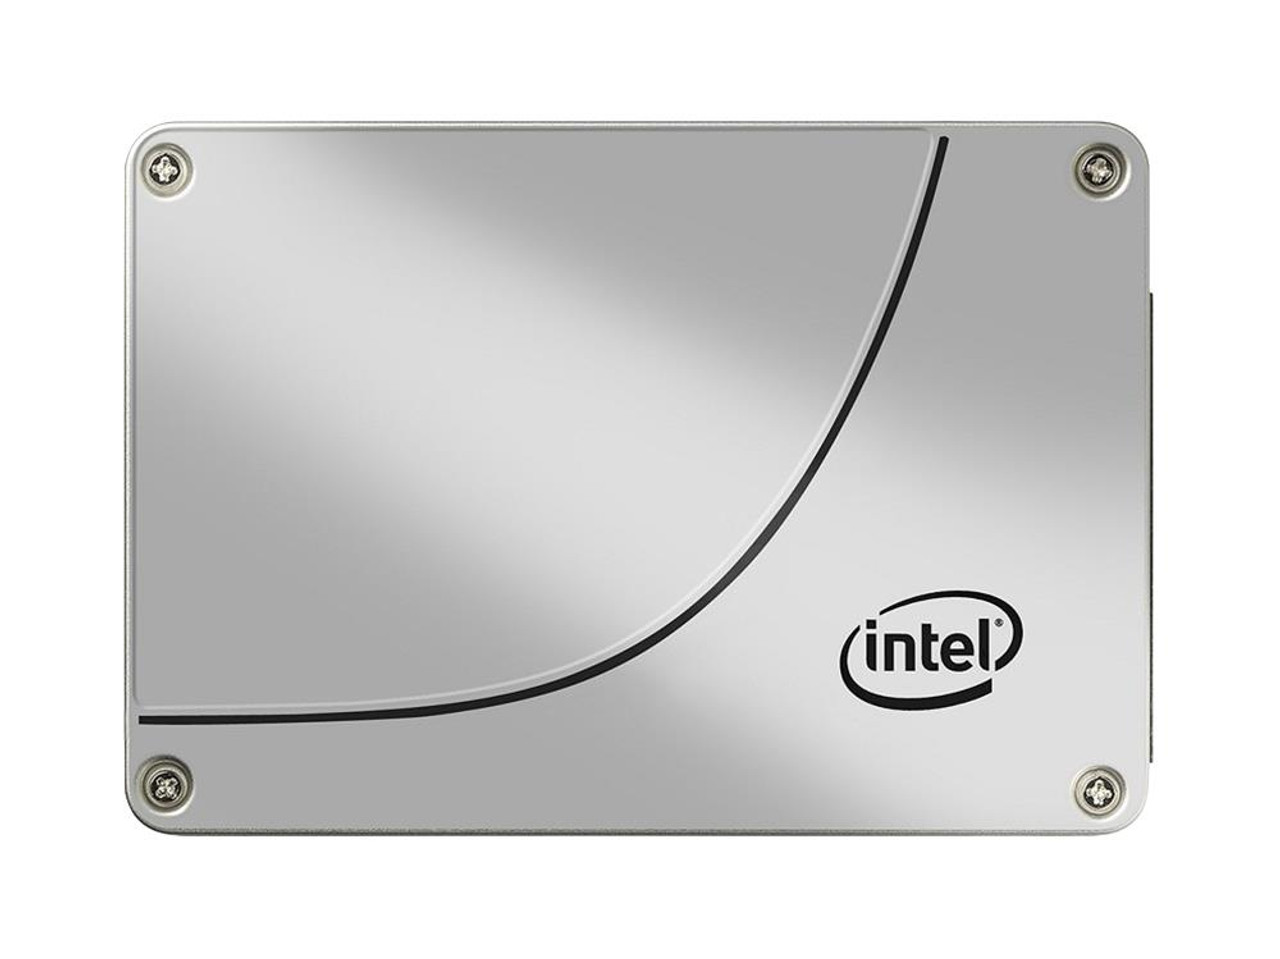 Intel 320 Series 300GB MLC SATA 3Gbps 2.5-inch Internal Solid State Drive (SSD) Mfr P/N 90135Y